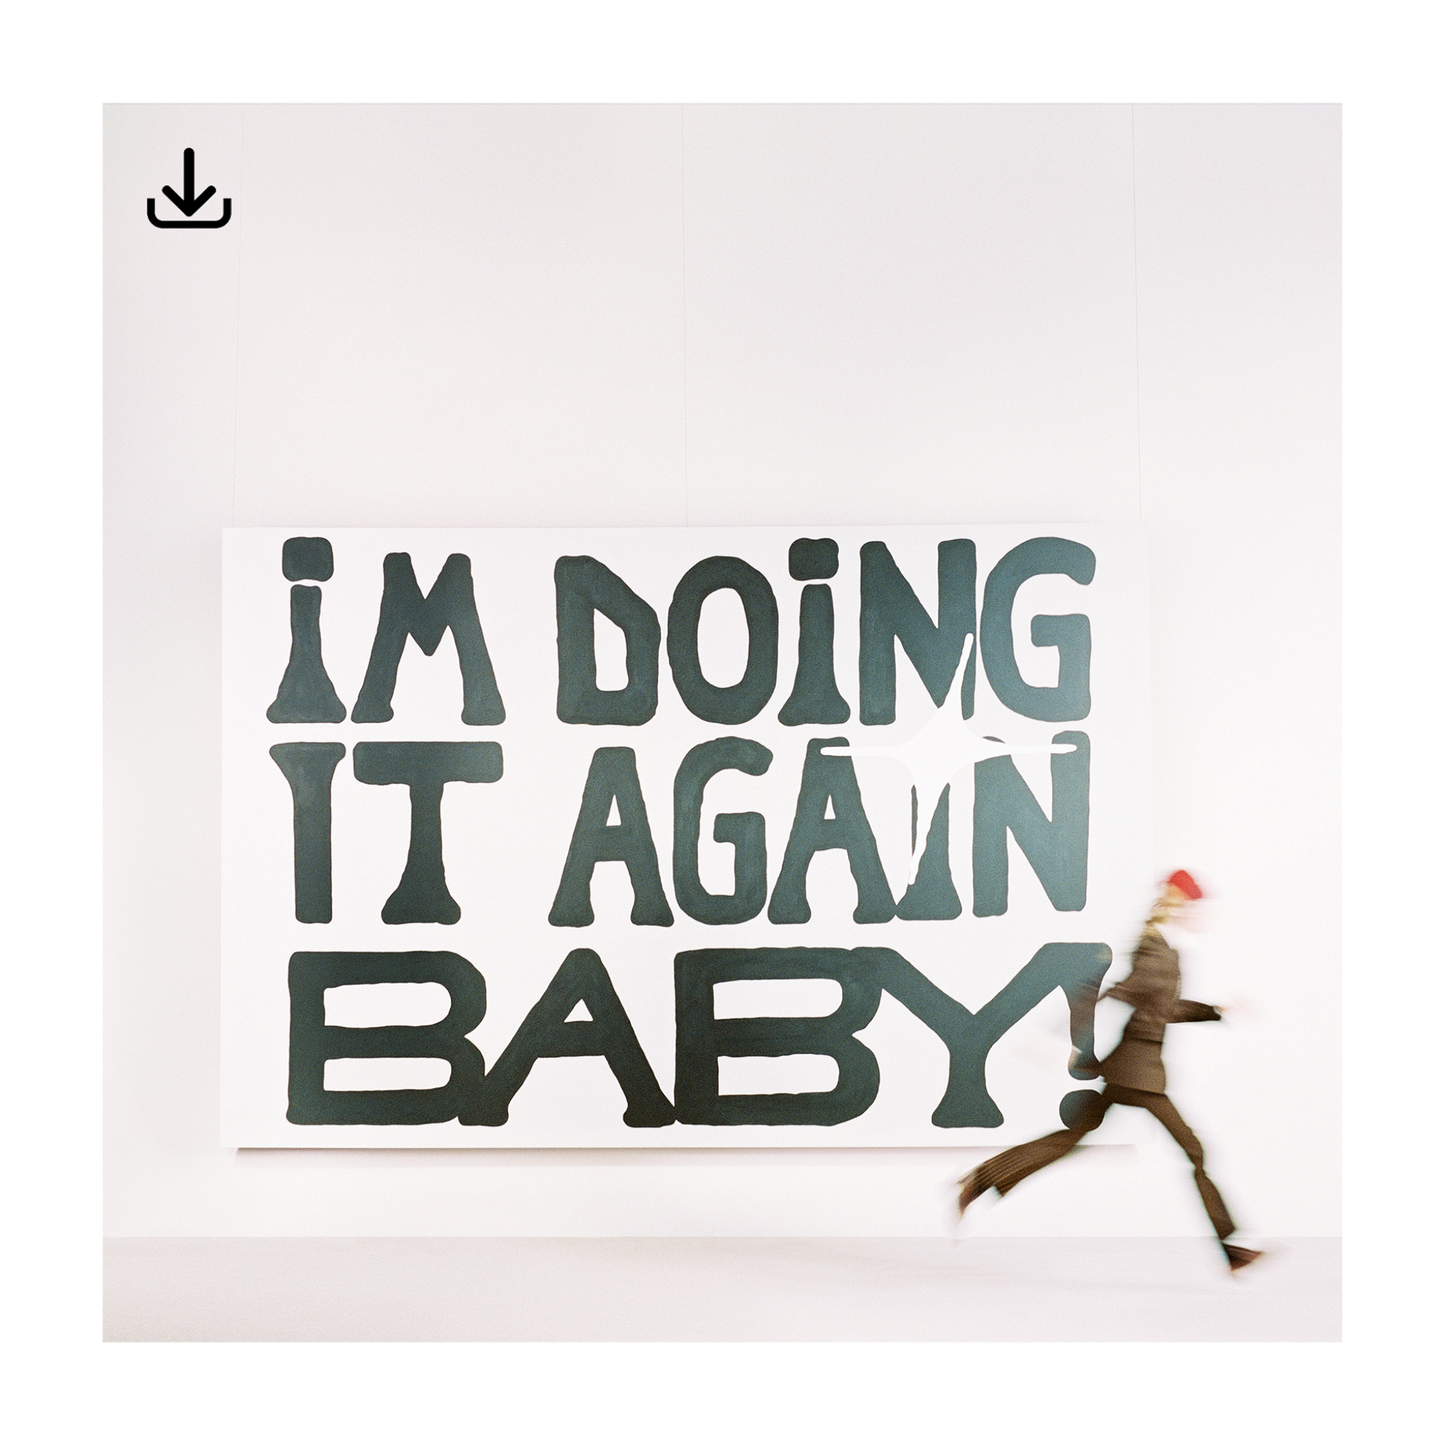 I’M DOING IT AGAIN BABY! DIGITAL ALBUM